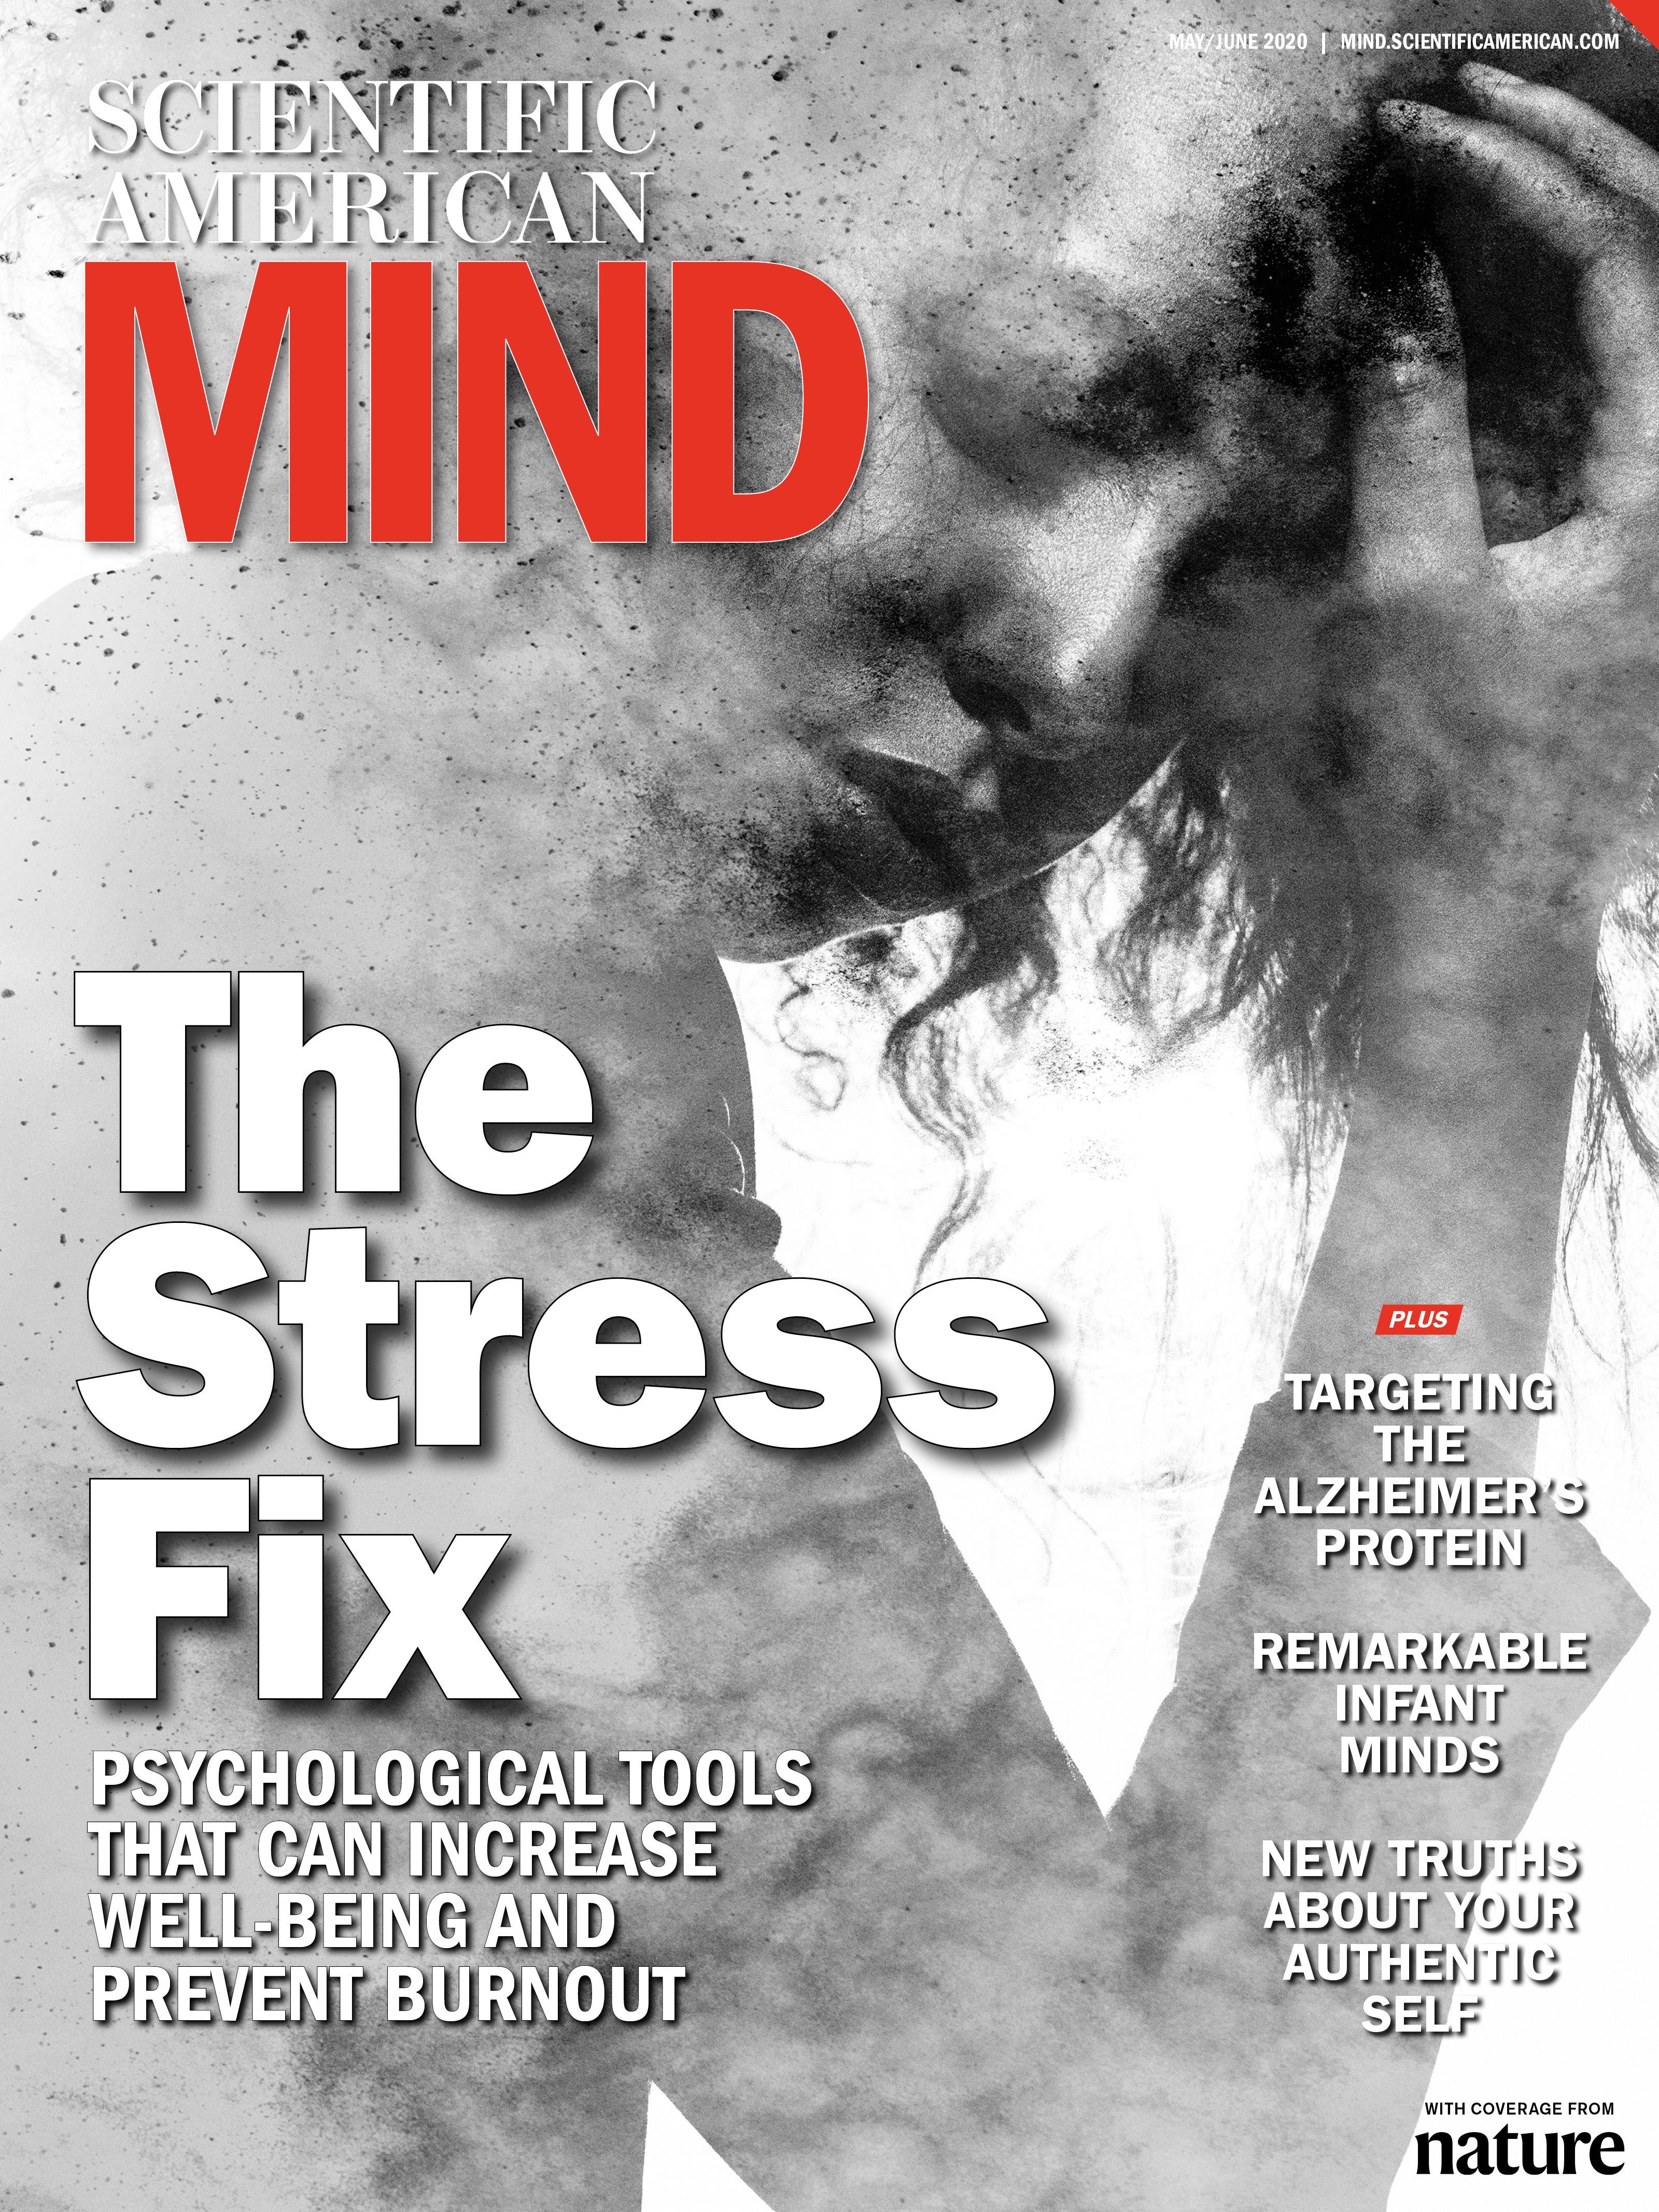 Scientific American Mind: The Stress Fix